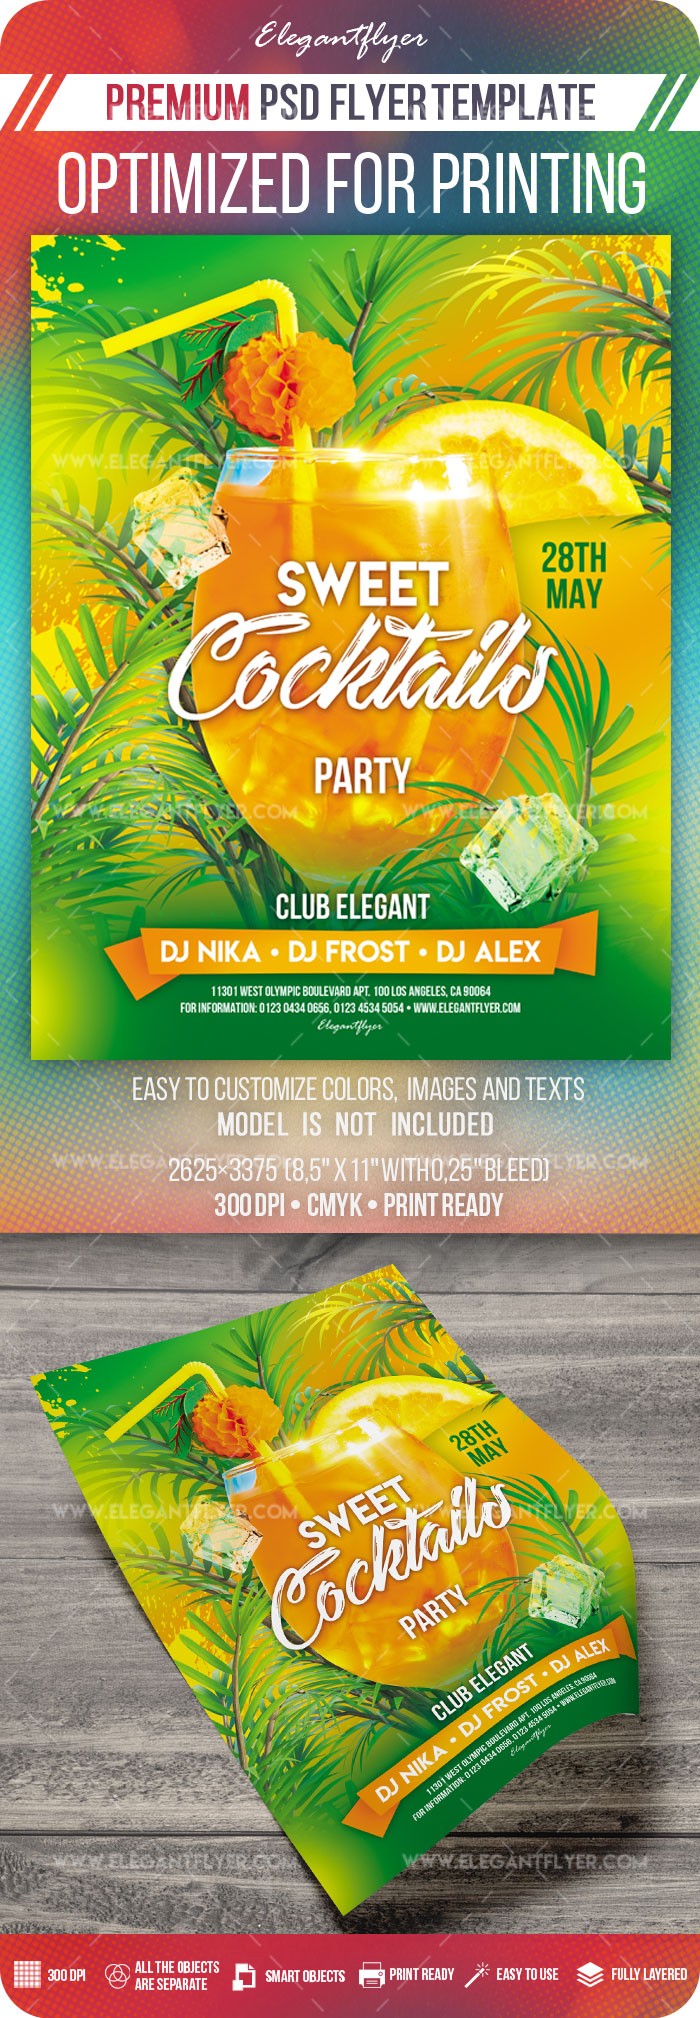 Süße Cocktails Party by ElegantFlyer